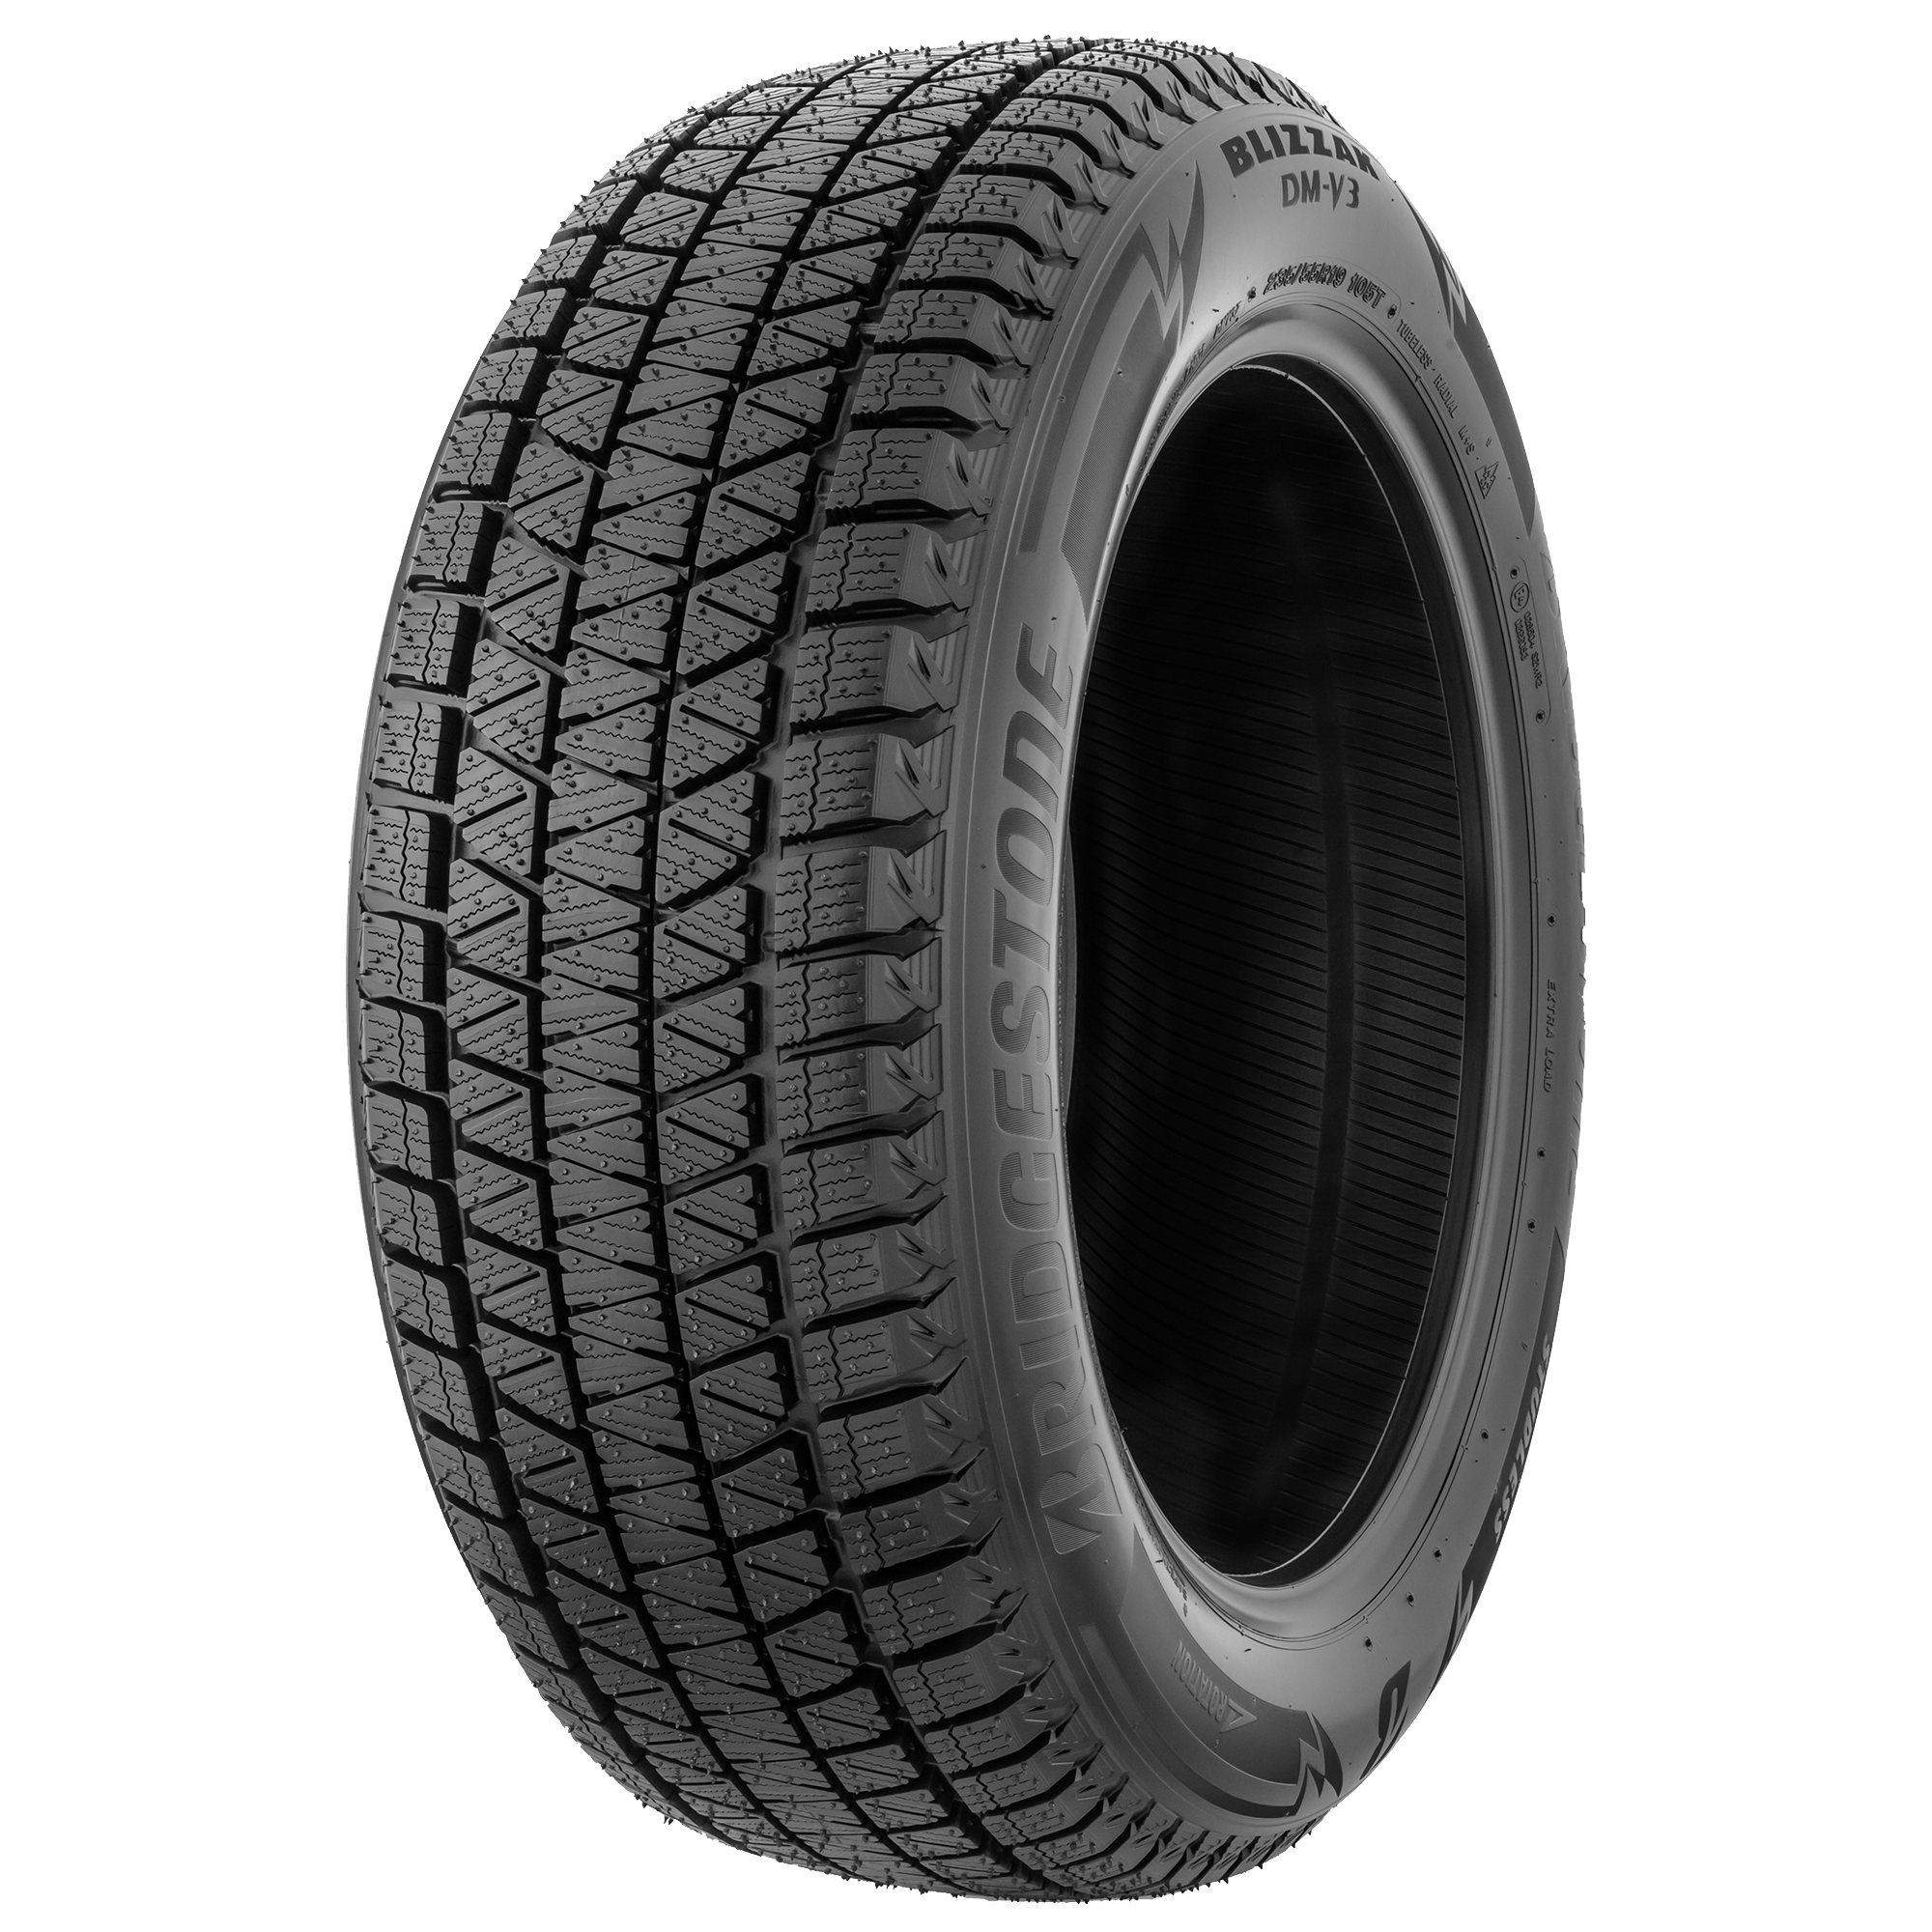 Bridgestone Blizzak DM-V3 235/55 tyre tyres 23555R18 100T 2355518 car R18